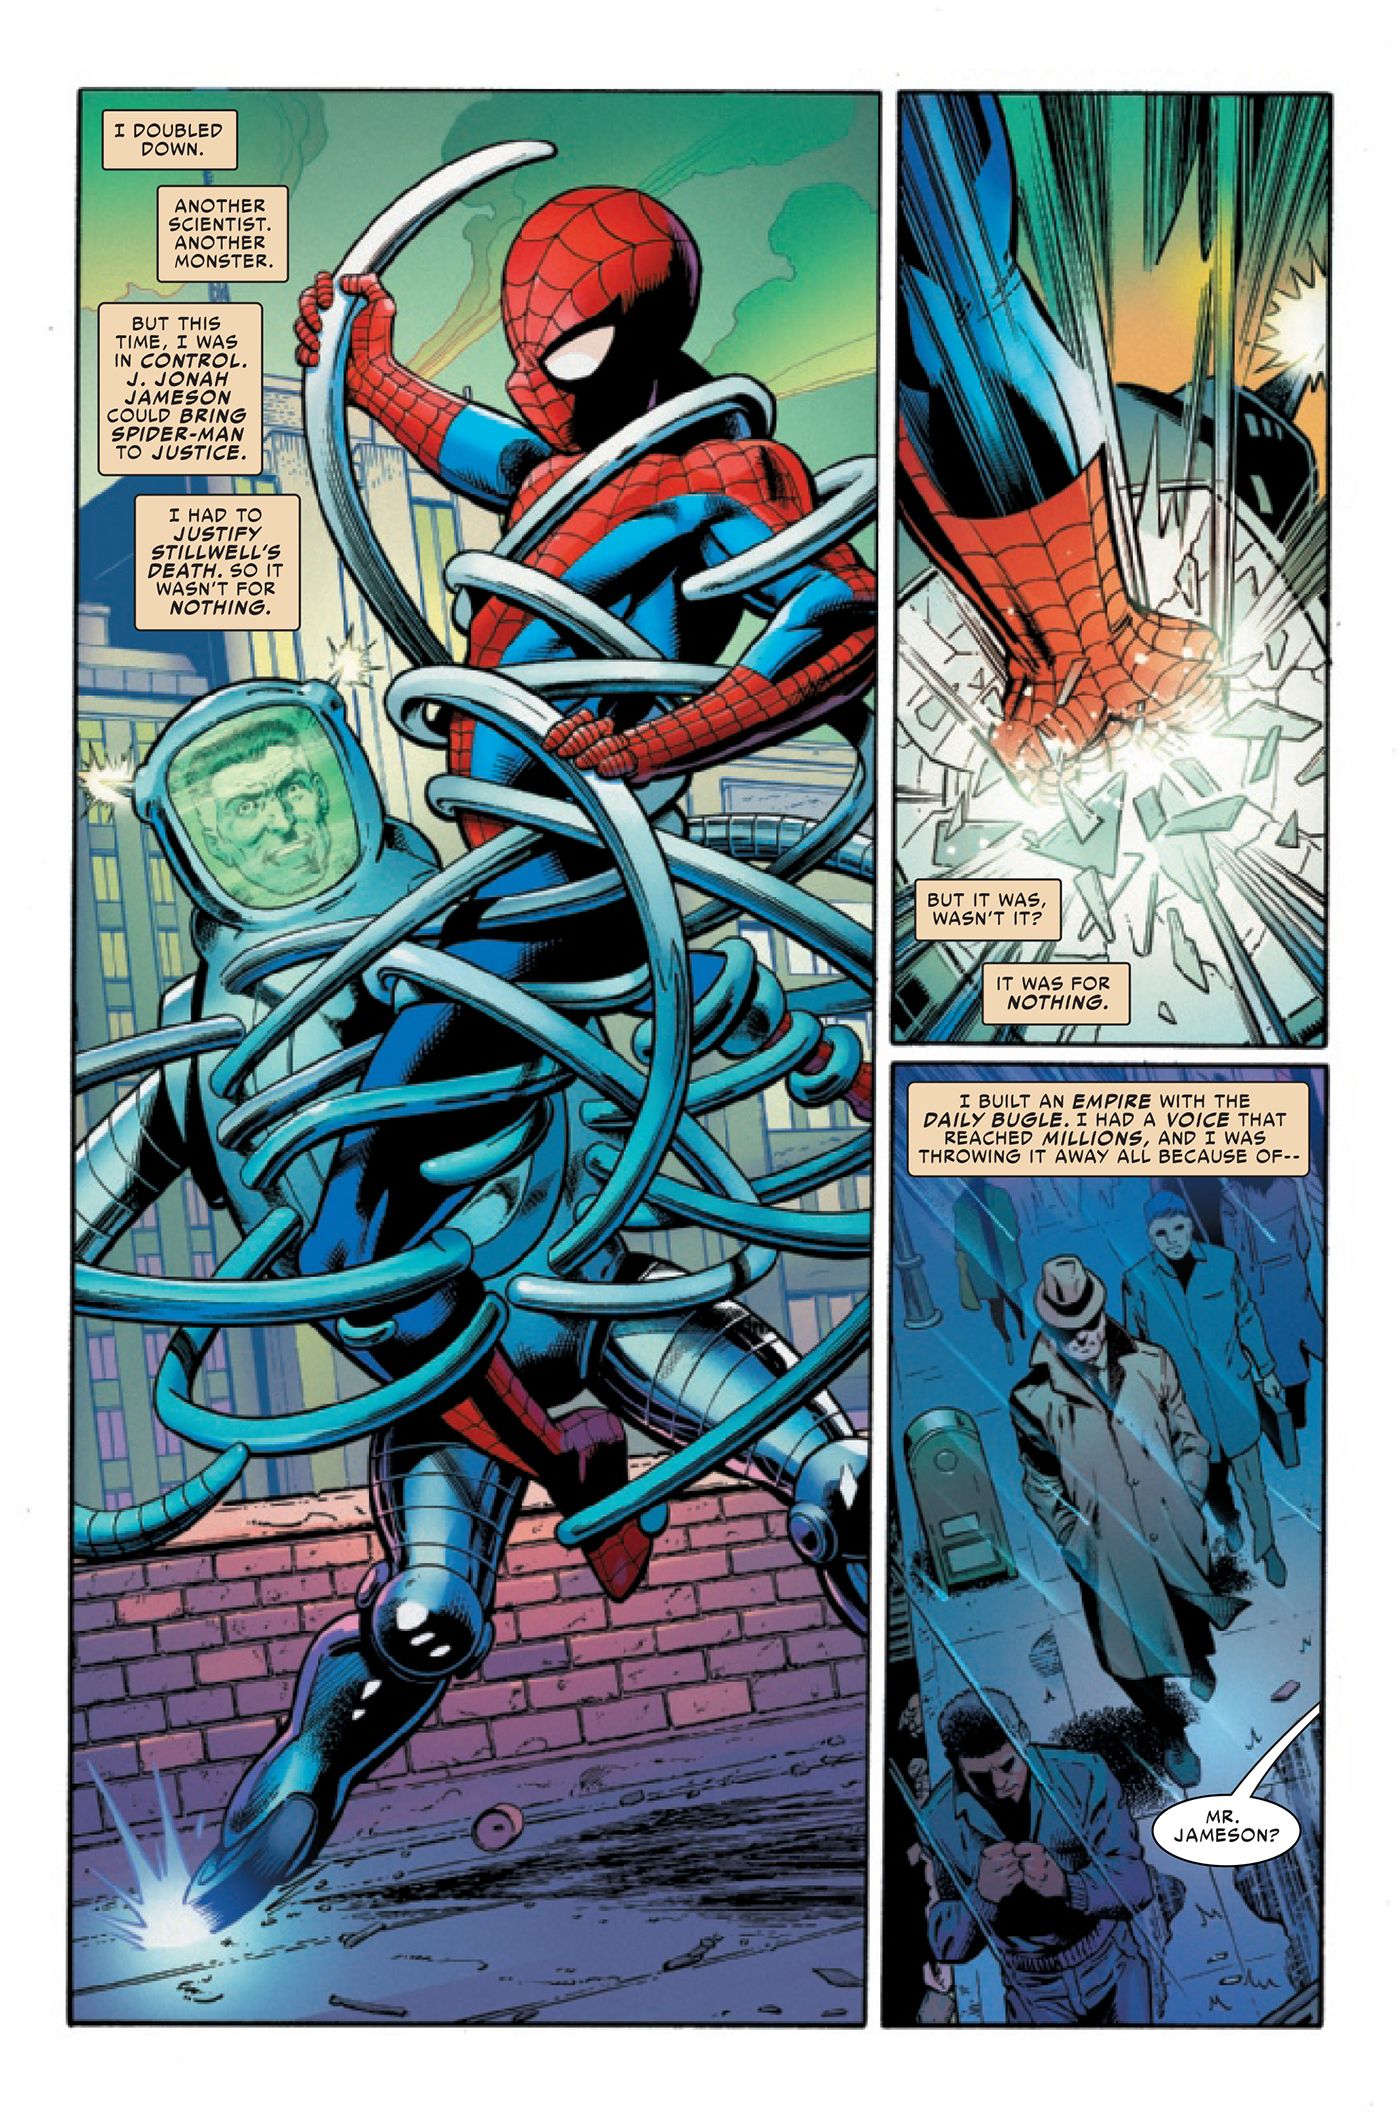 J. Jonah Jameson remembers taking Spider-Man on himself.